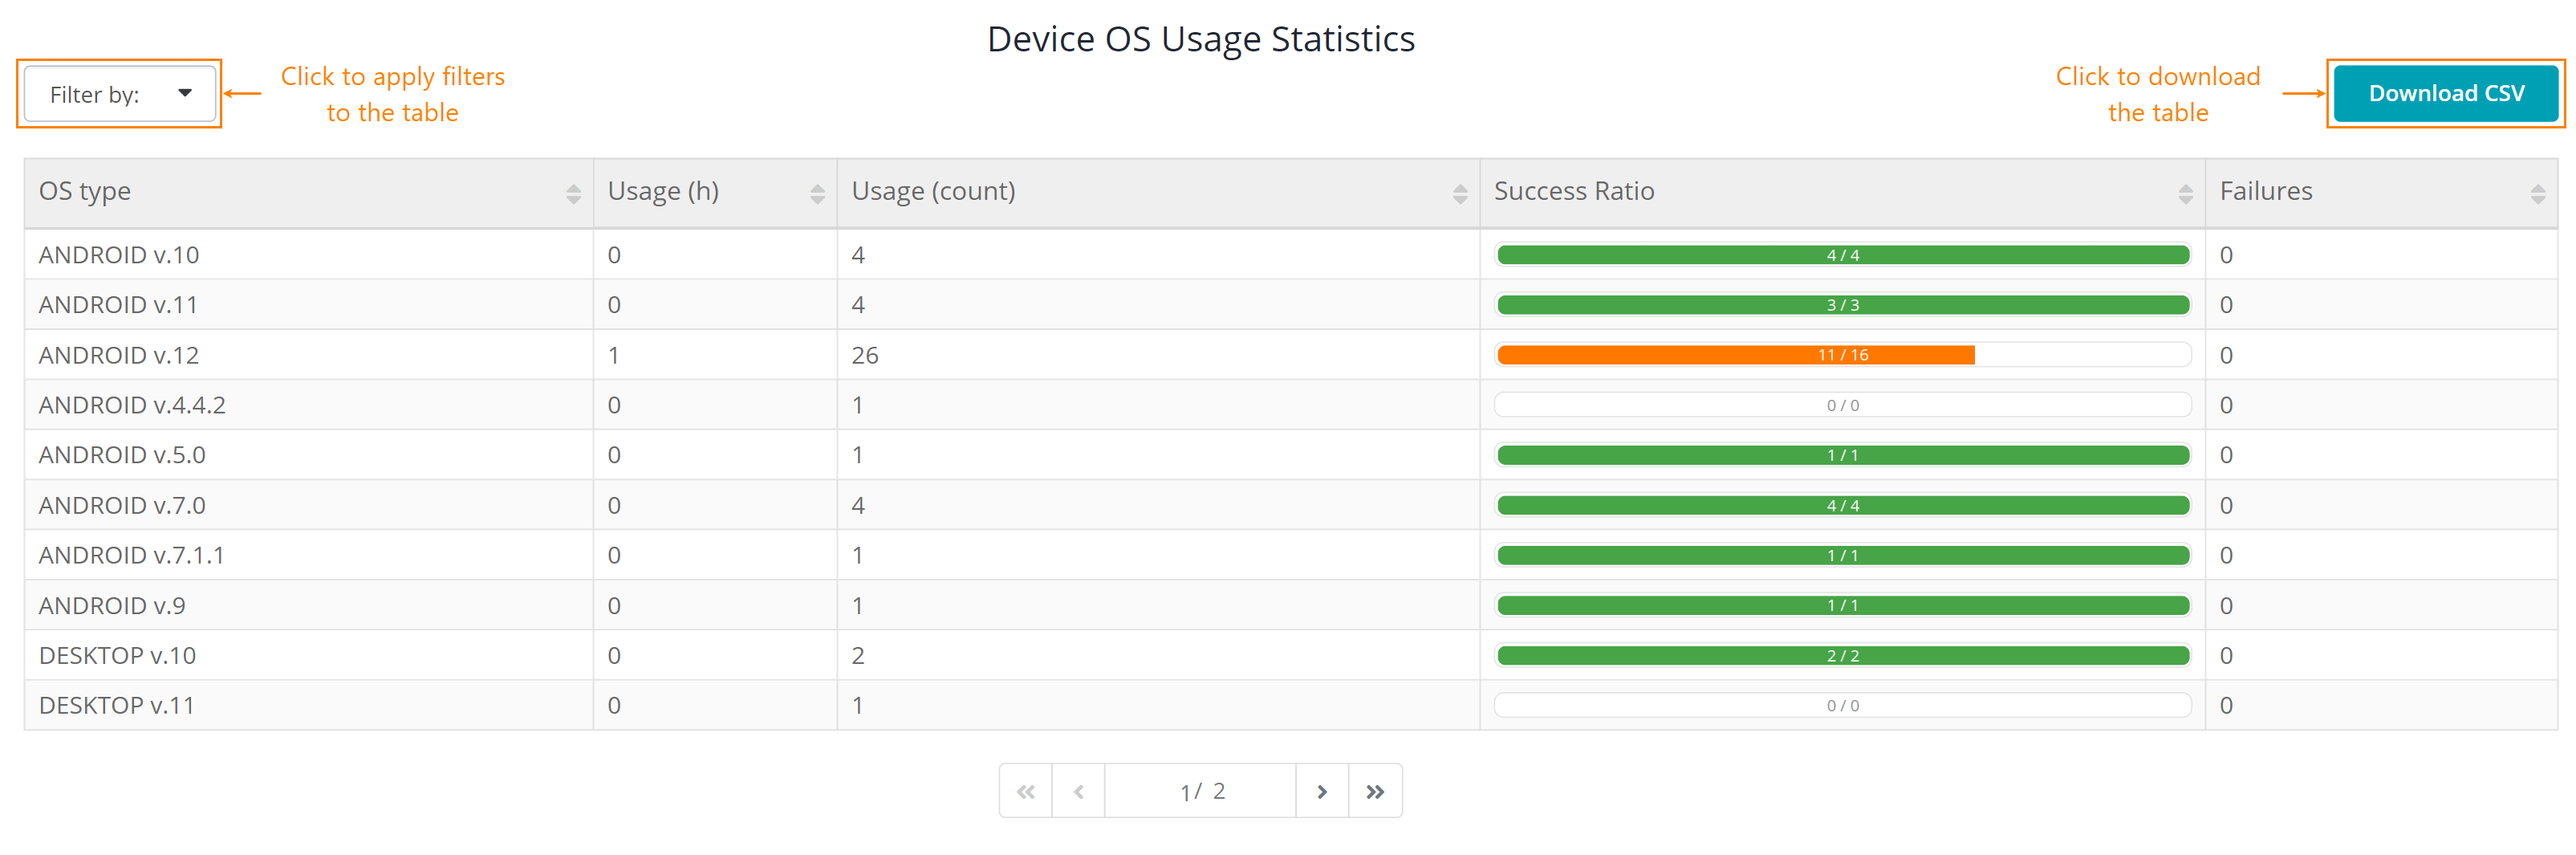 Device OS usage statistics